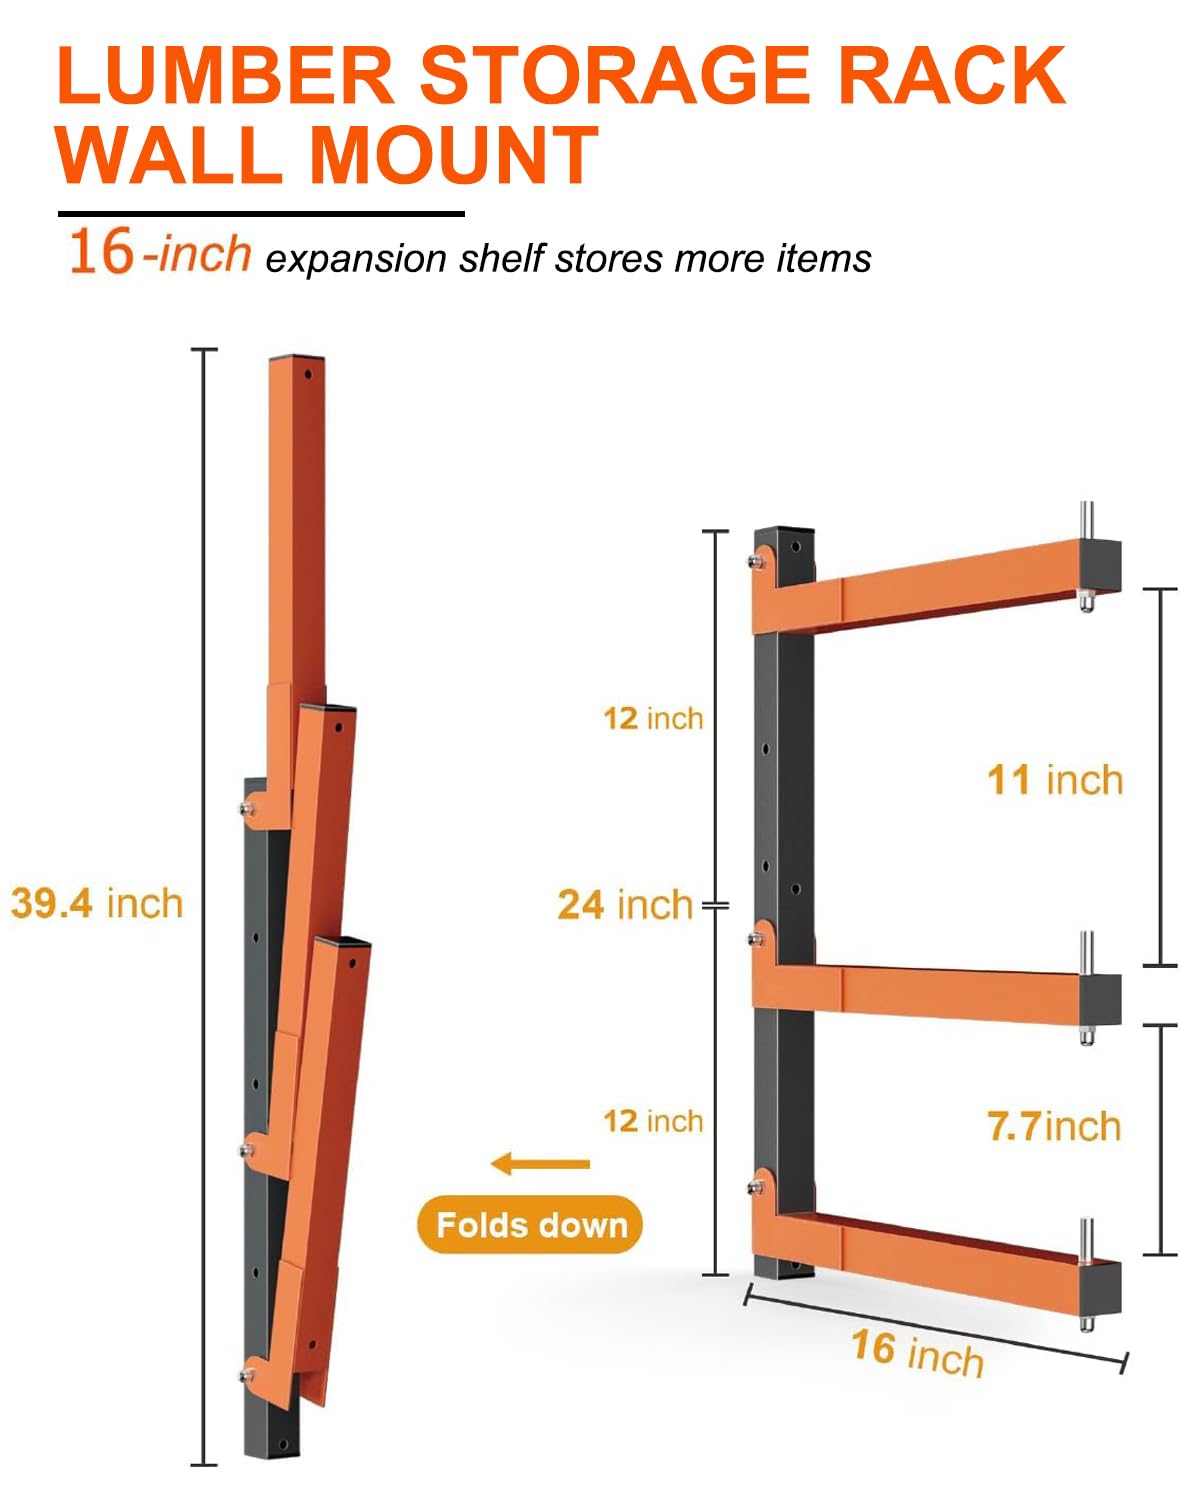 Acools Lumber Storage Rack, Lumber Rack Wall Mount, Heavy Duty Wood Storage Racks with 9-Level System, 1080 lb Durable Garage Wood Organizer, Orange